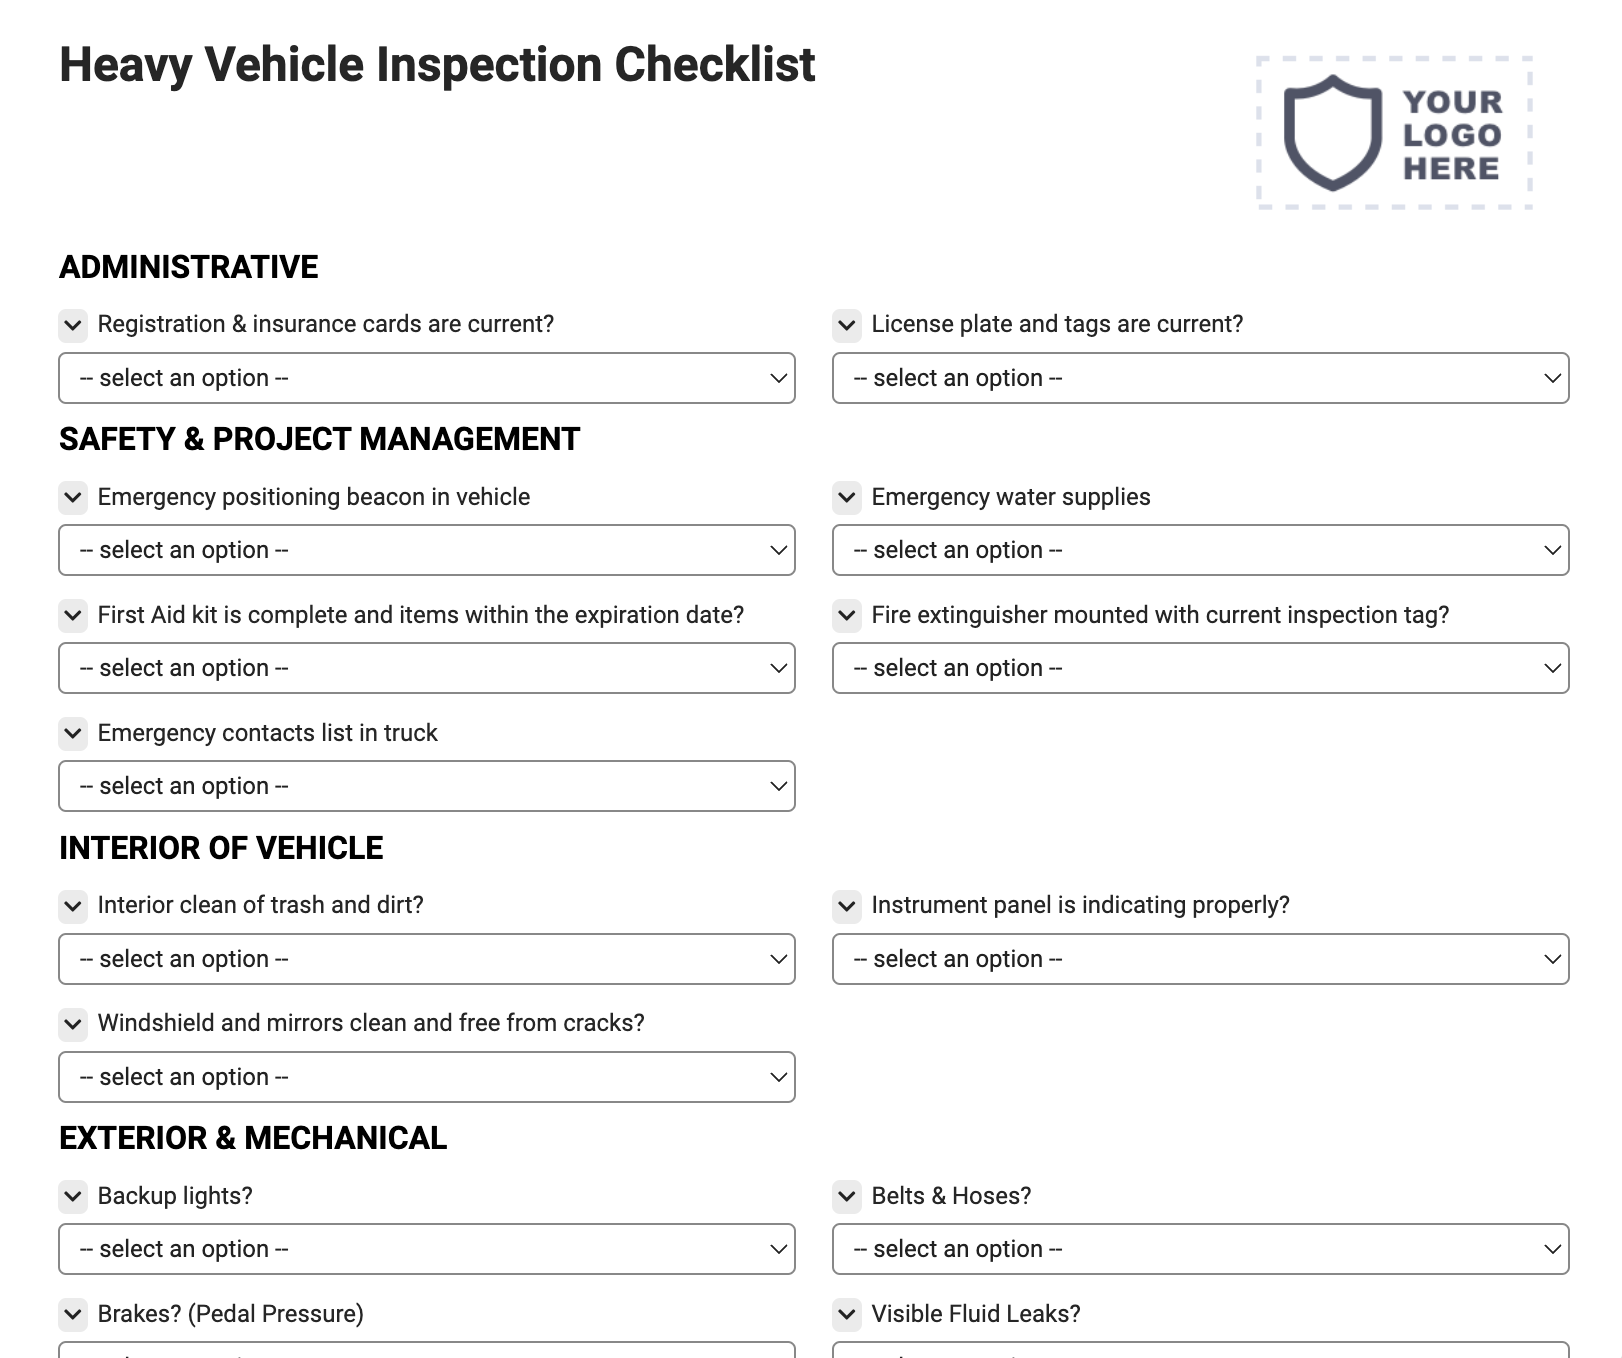 Heavy Vehicle Inspection Checklist